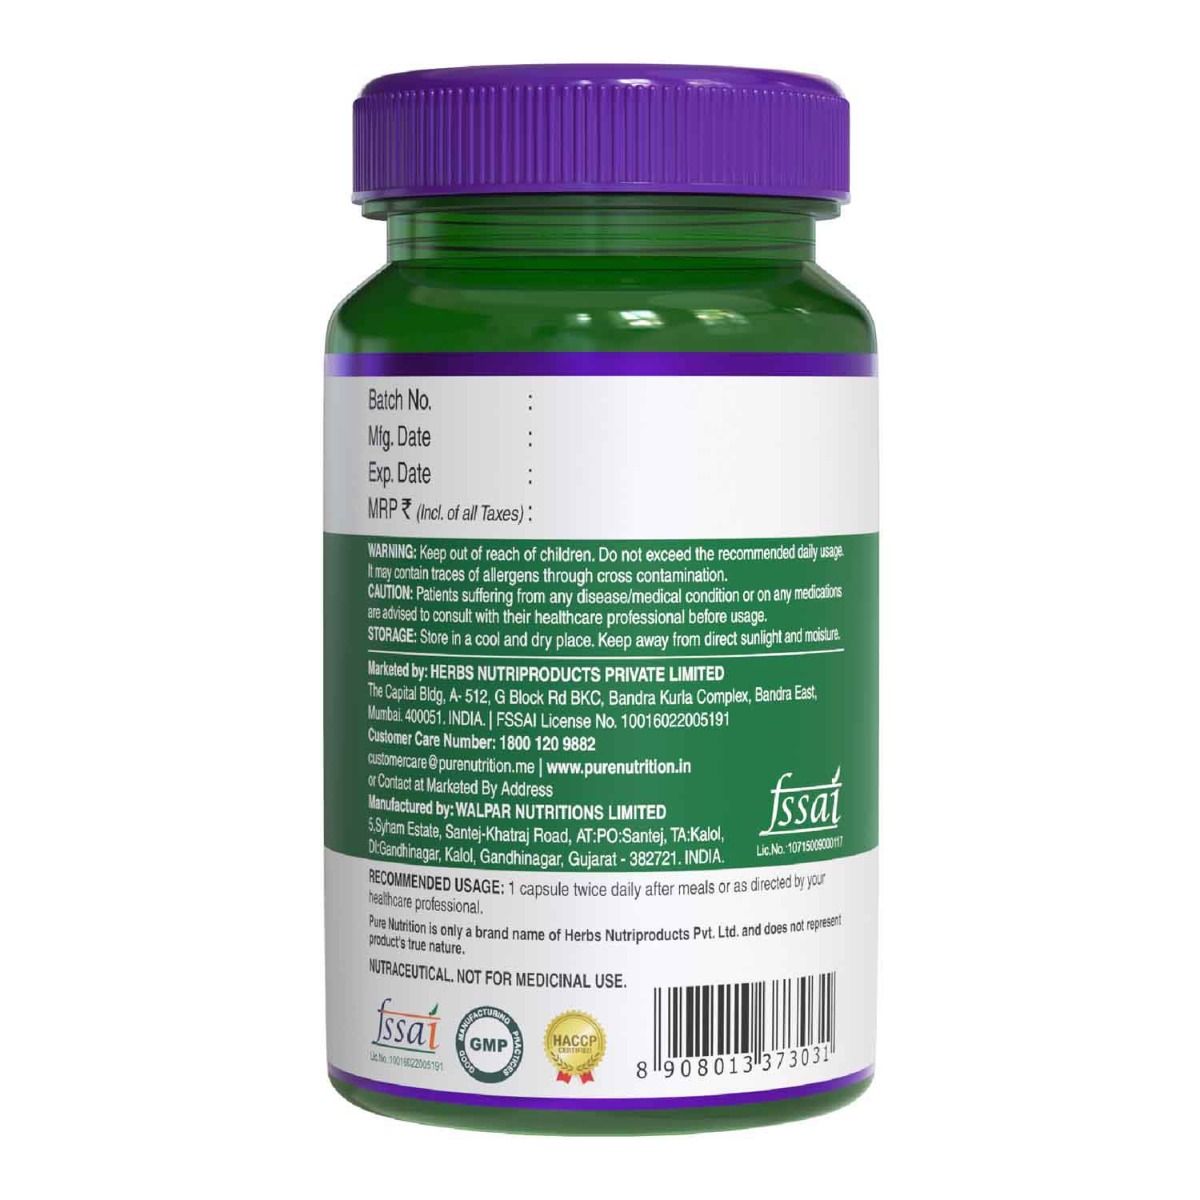 Pure Nutrition Progut 50 Billion CFU 600 mg, 60 Capsules, Pack of 1 